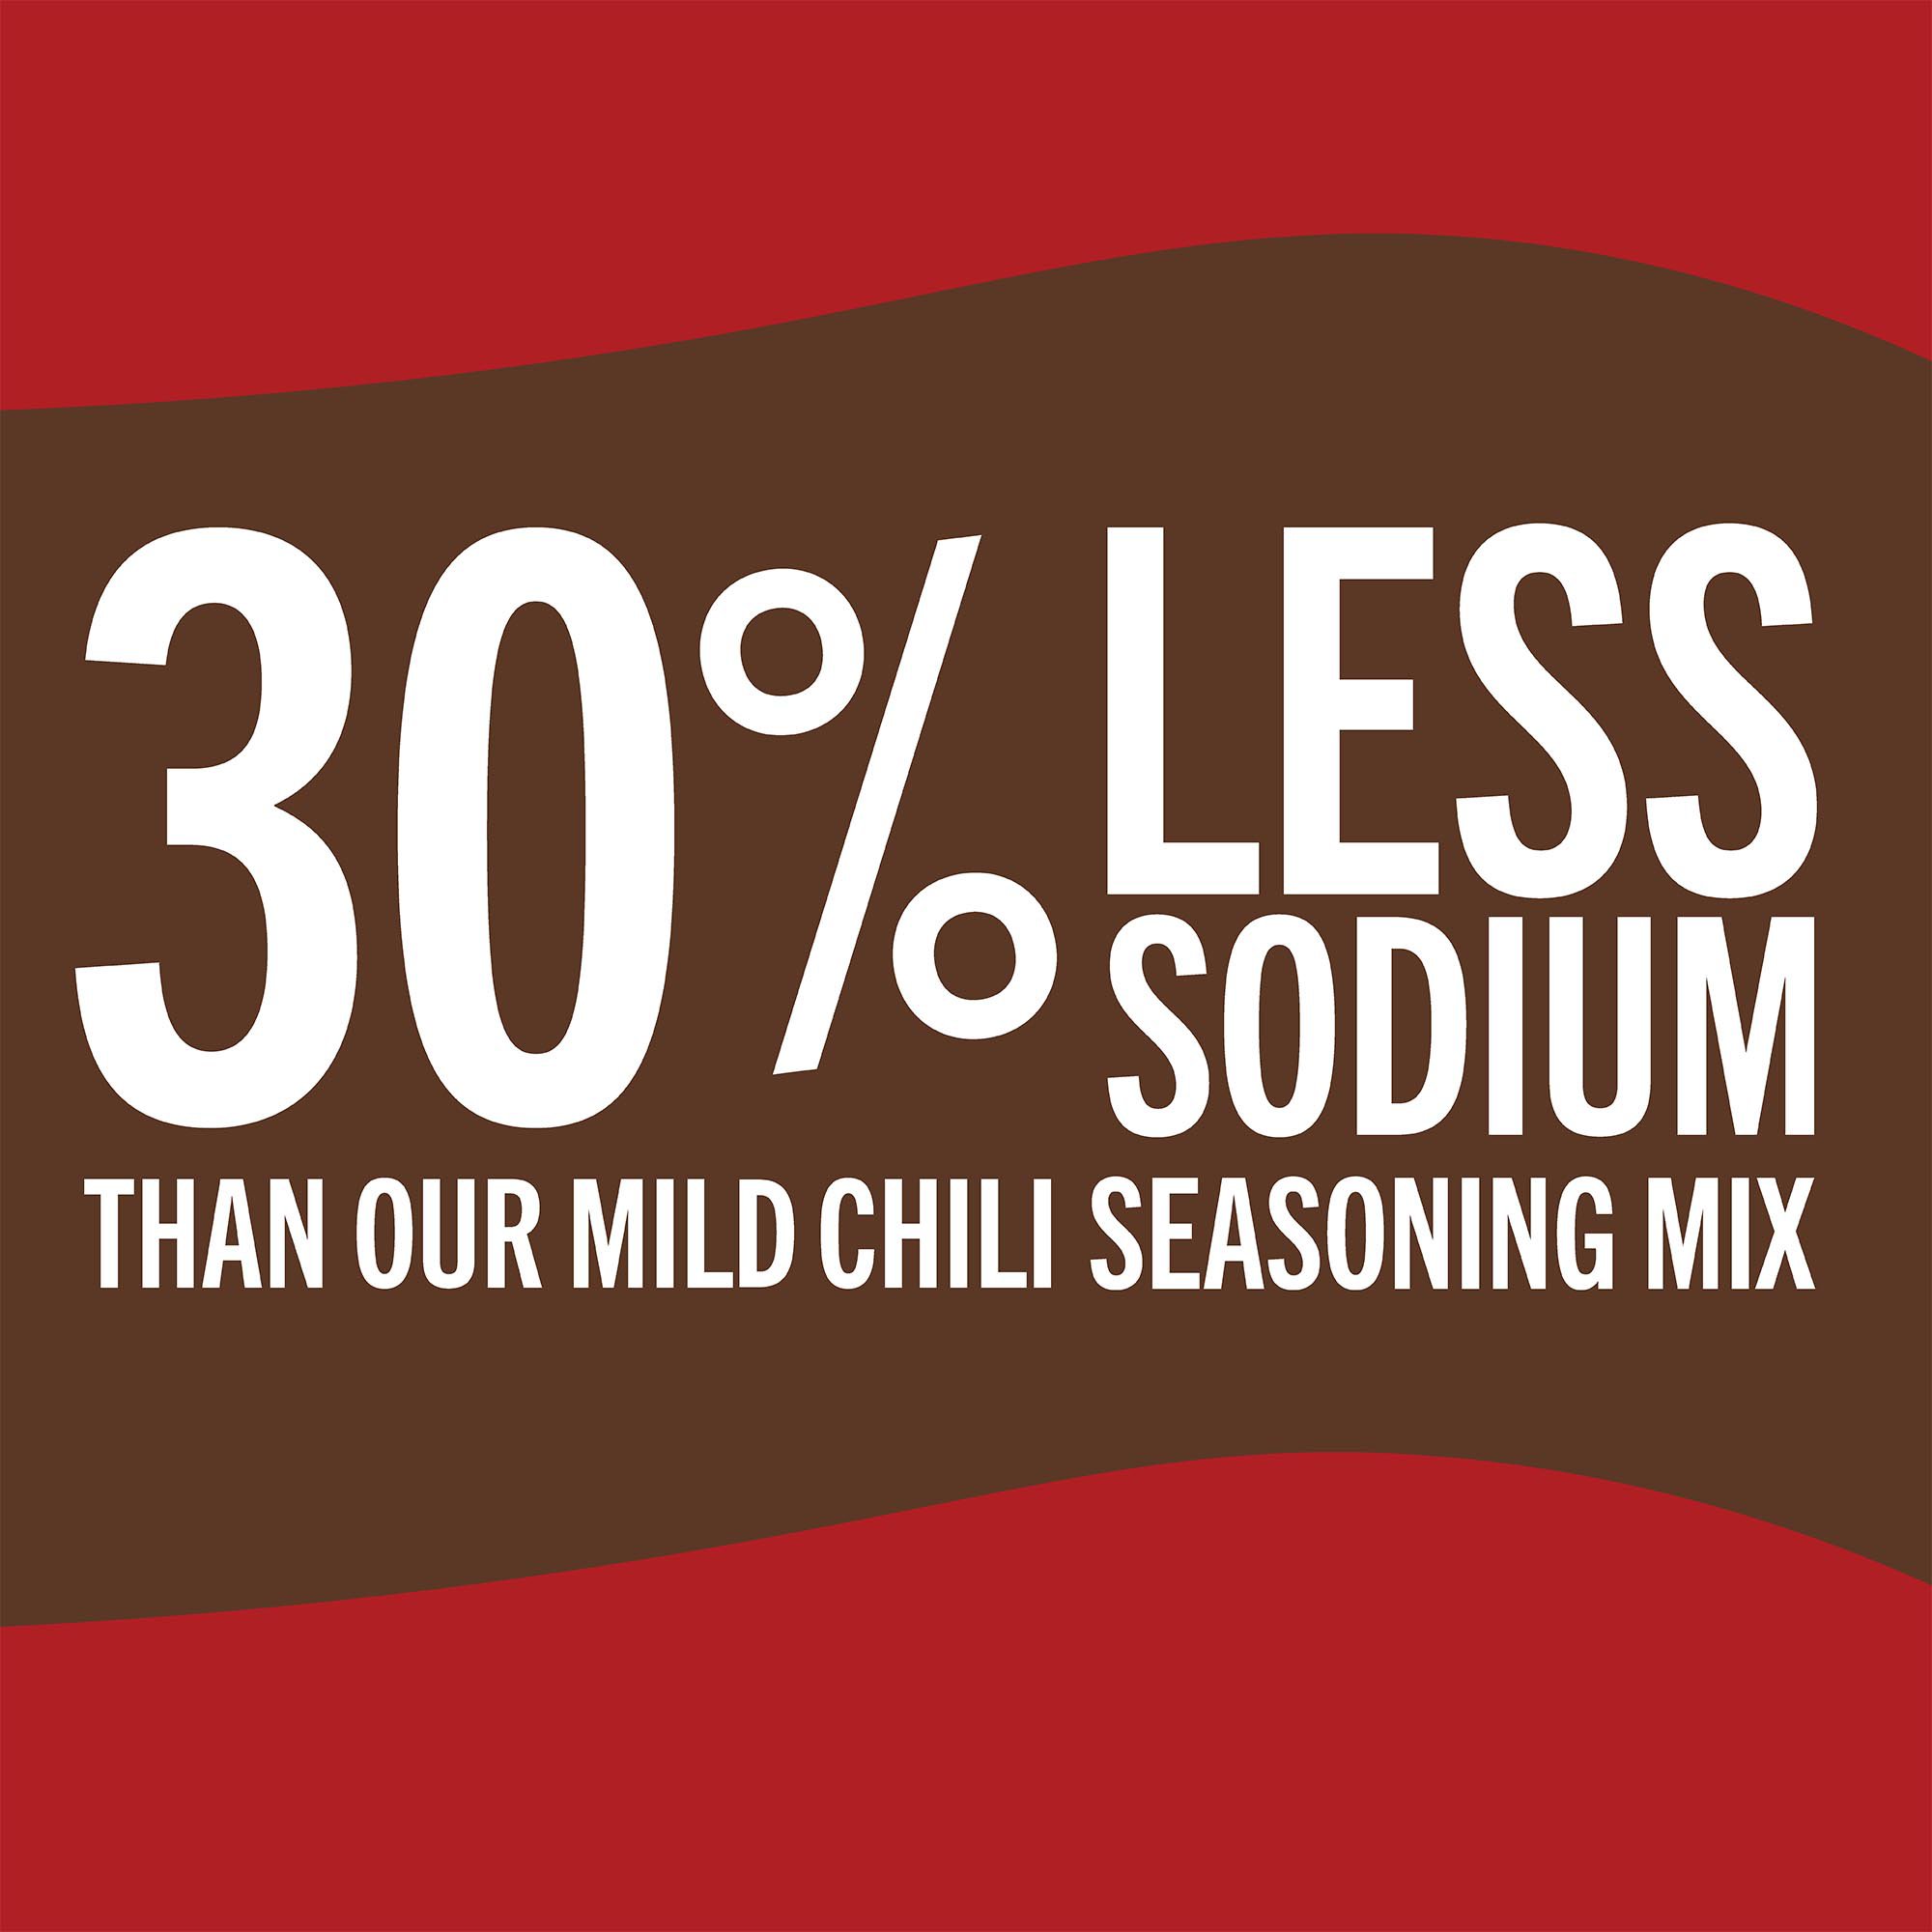 Mccormick Seasoning Mix, Chili, Original - 1.25 oz